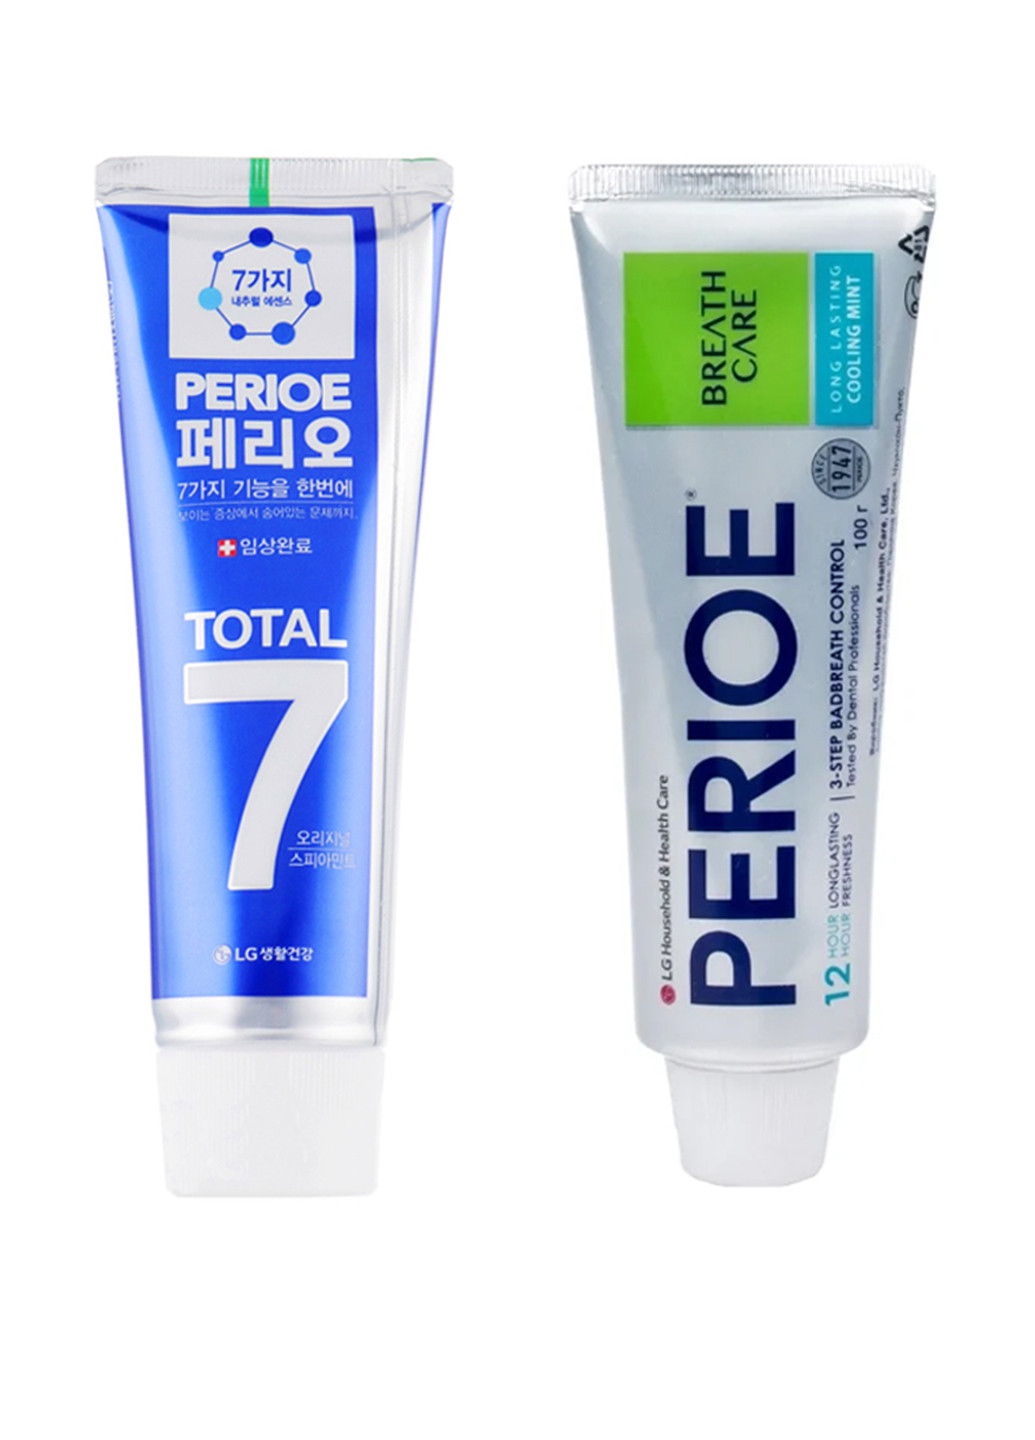 Набор зубных паст "Тотал 7 оригинал + Длительный аромат охлаждающей мяты" LG Perioe, 2 шт. (120 г+100 г) LG Household & Health Care (113785971)